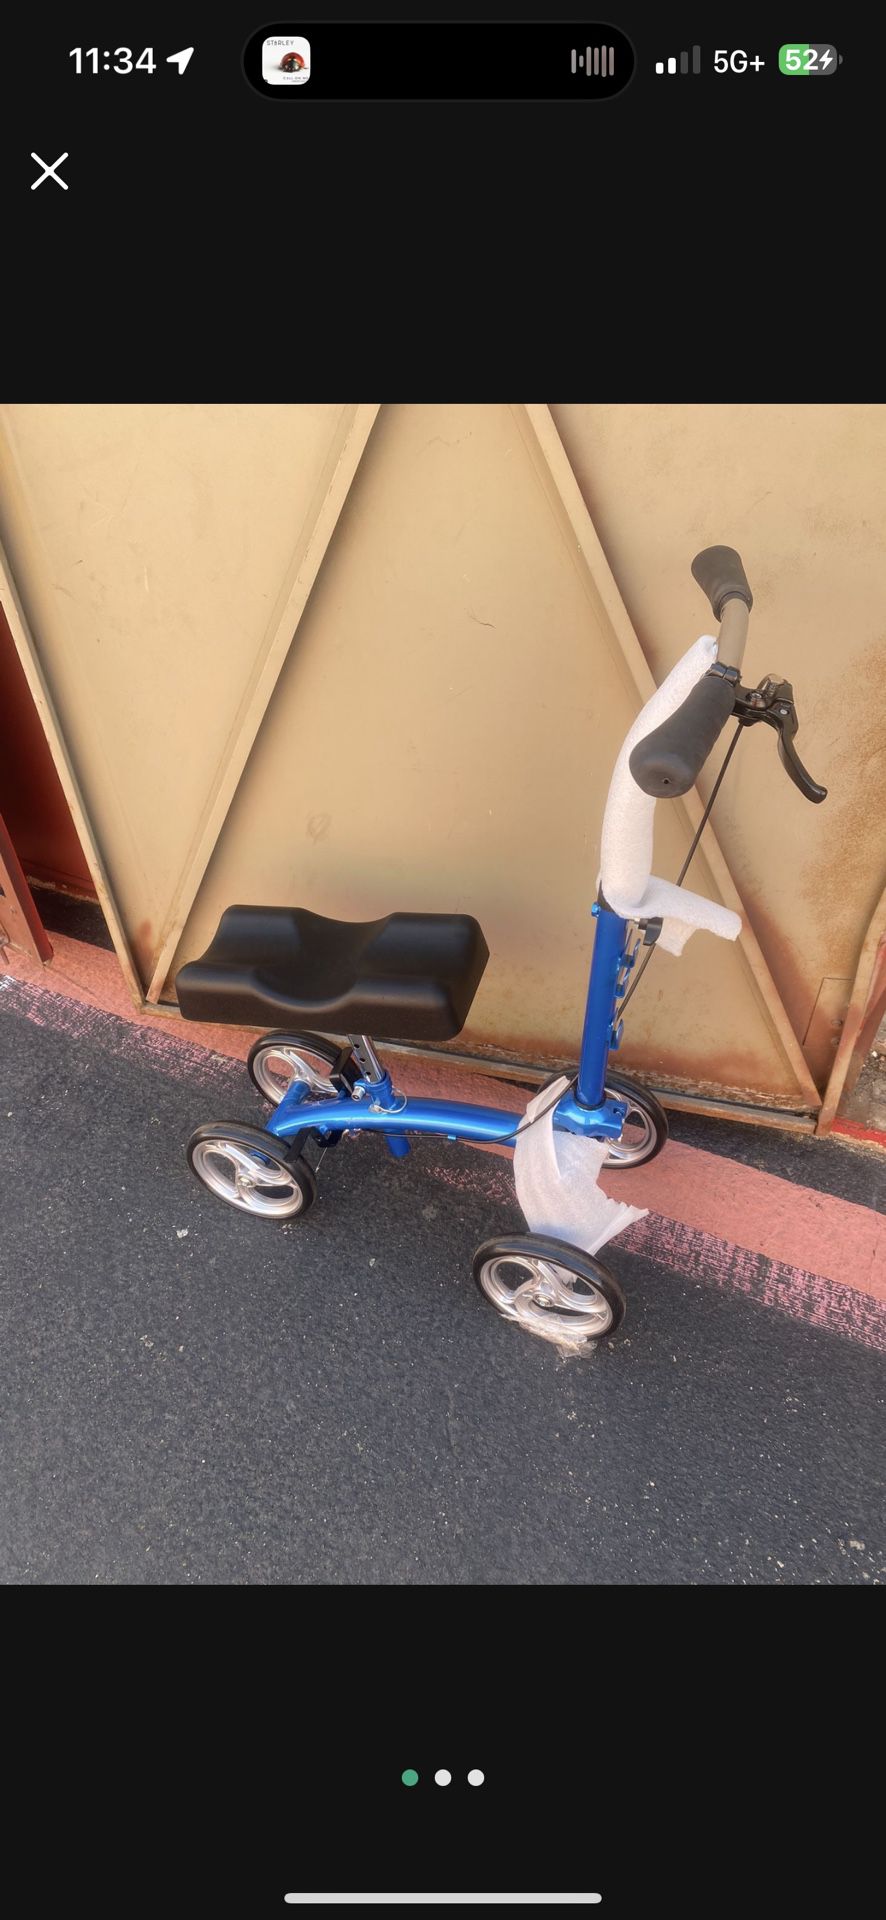 Brand New Knee Scooter - Still In Box 